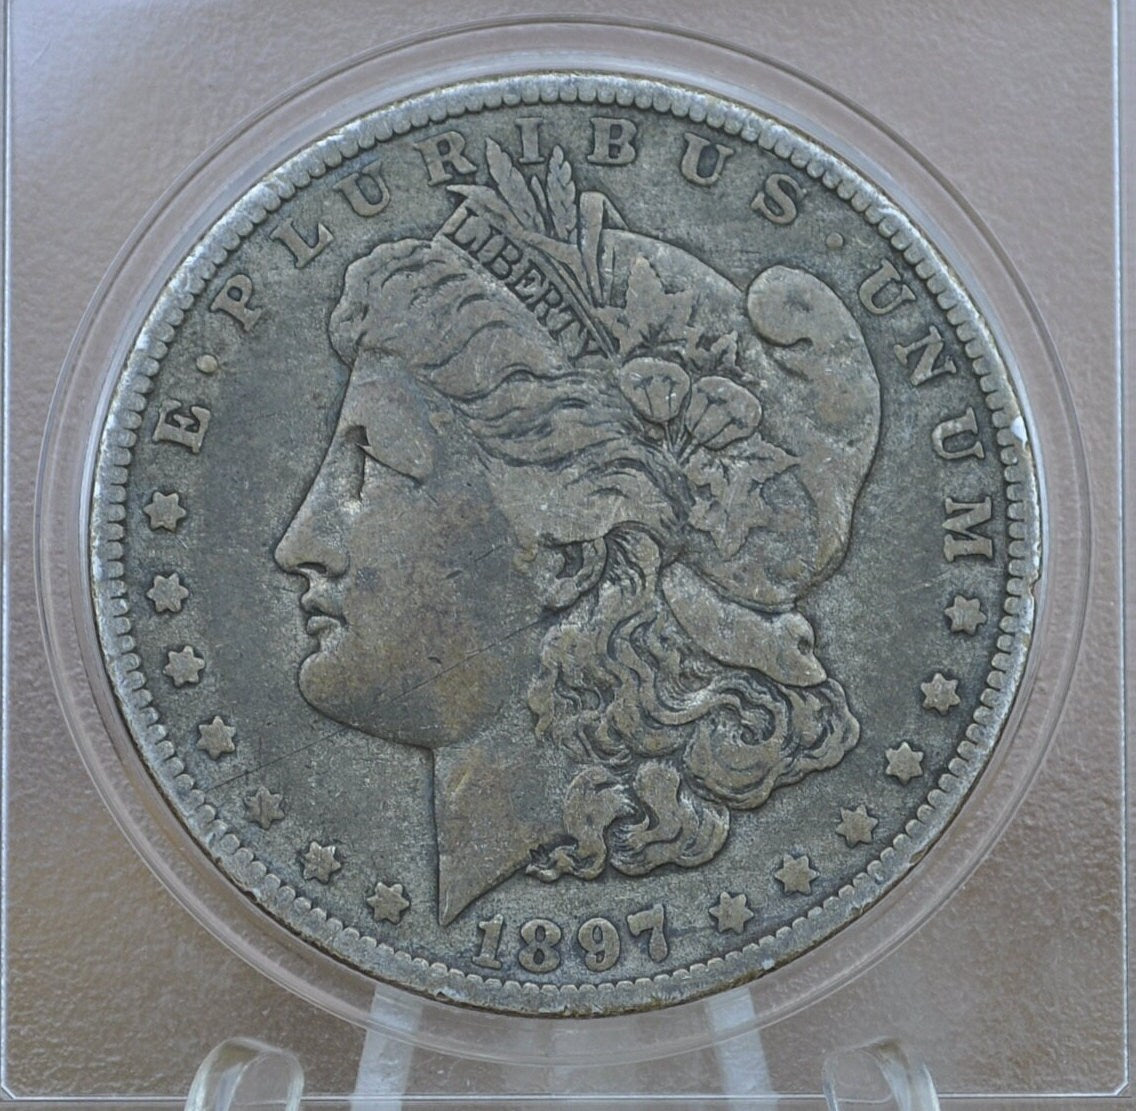 1897-O Morgan Silver Dollar - Choose by Grade / Condition - New Orleans Mint - 1897 O Silver Dollar - 1897 O Morgan Dollar - Better Date